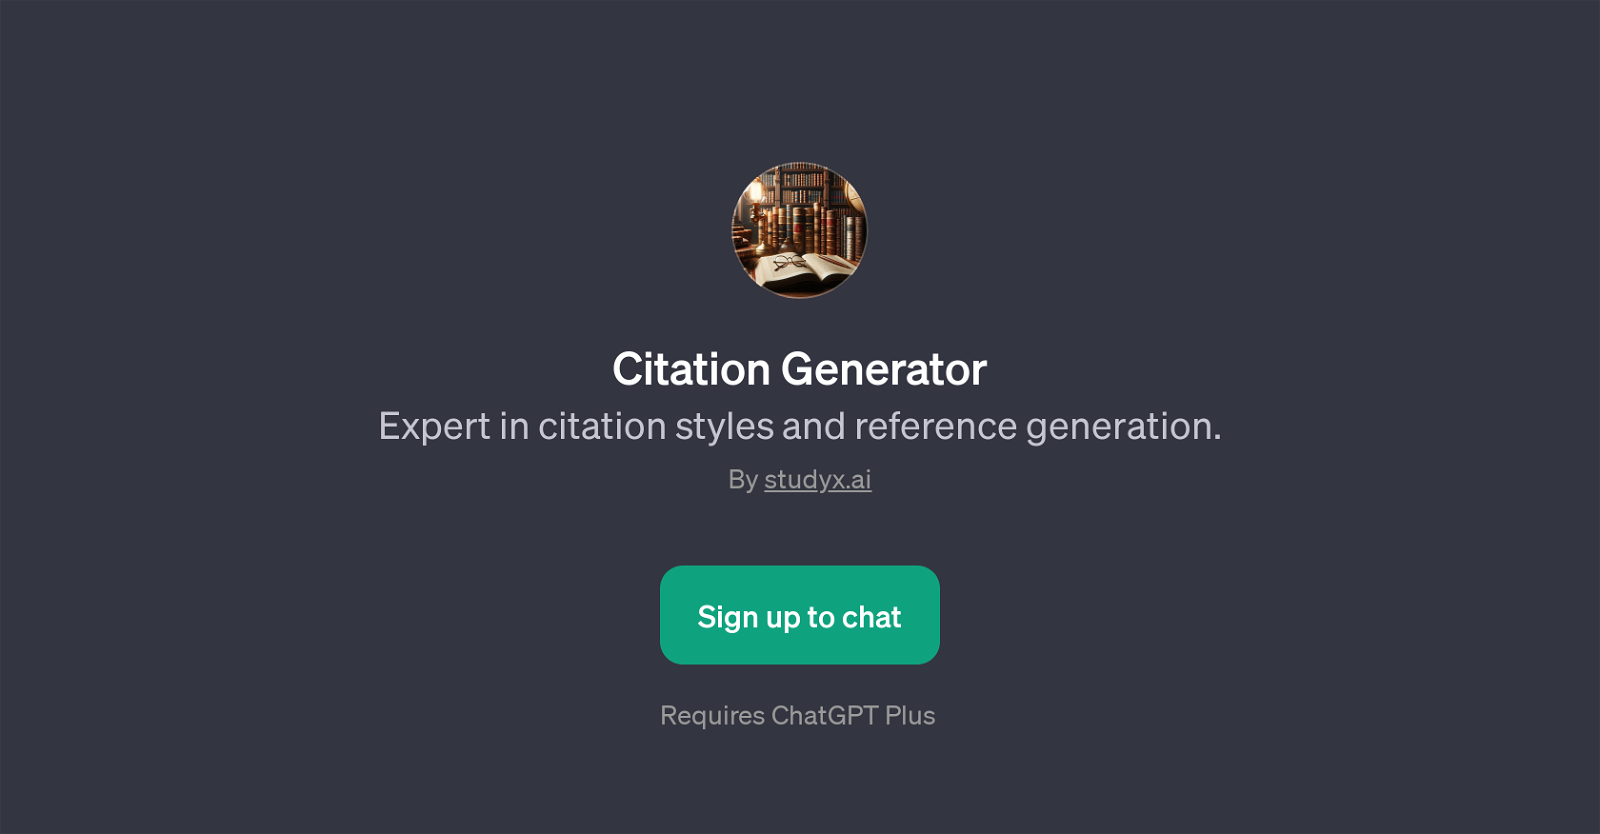 Citation Generator website